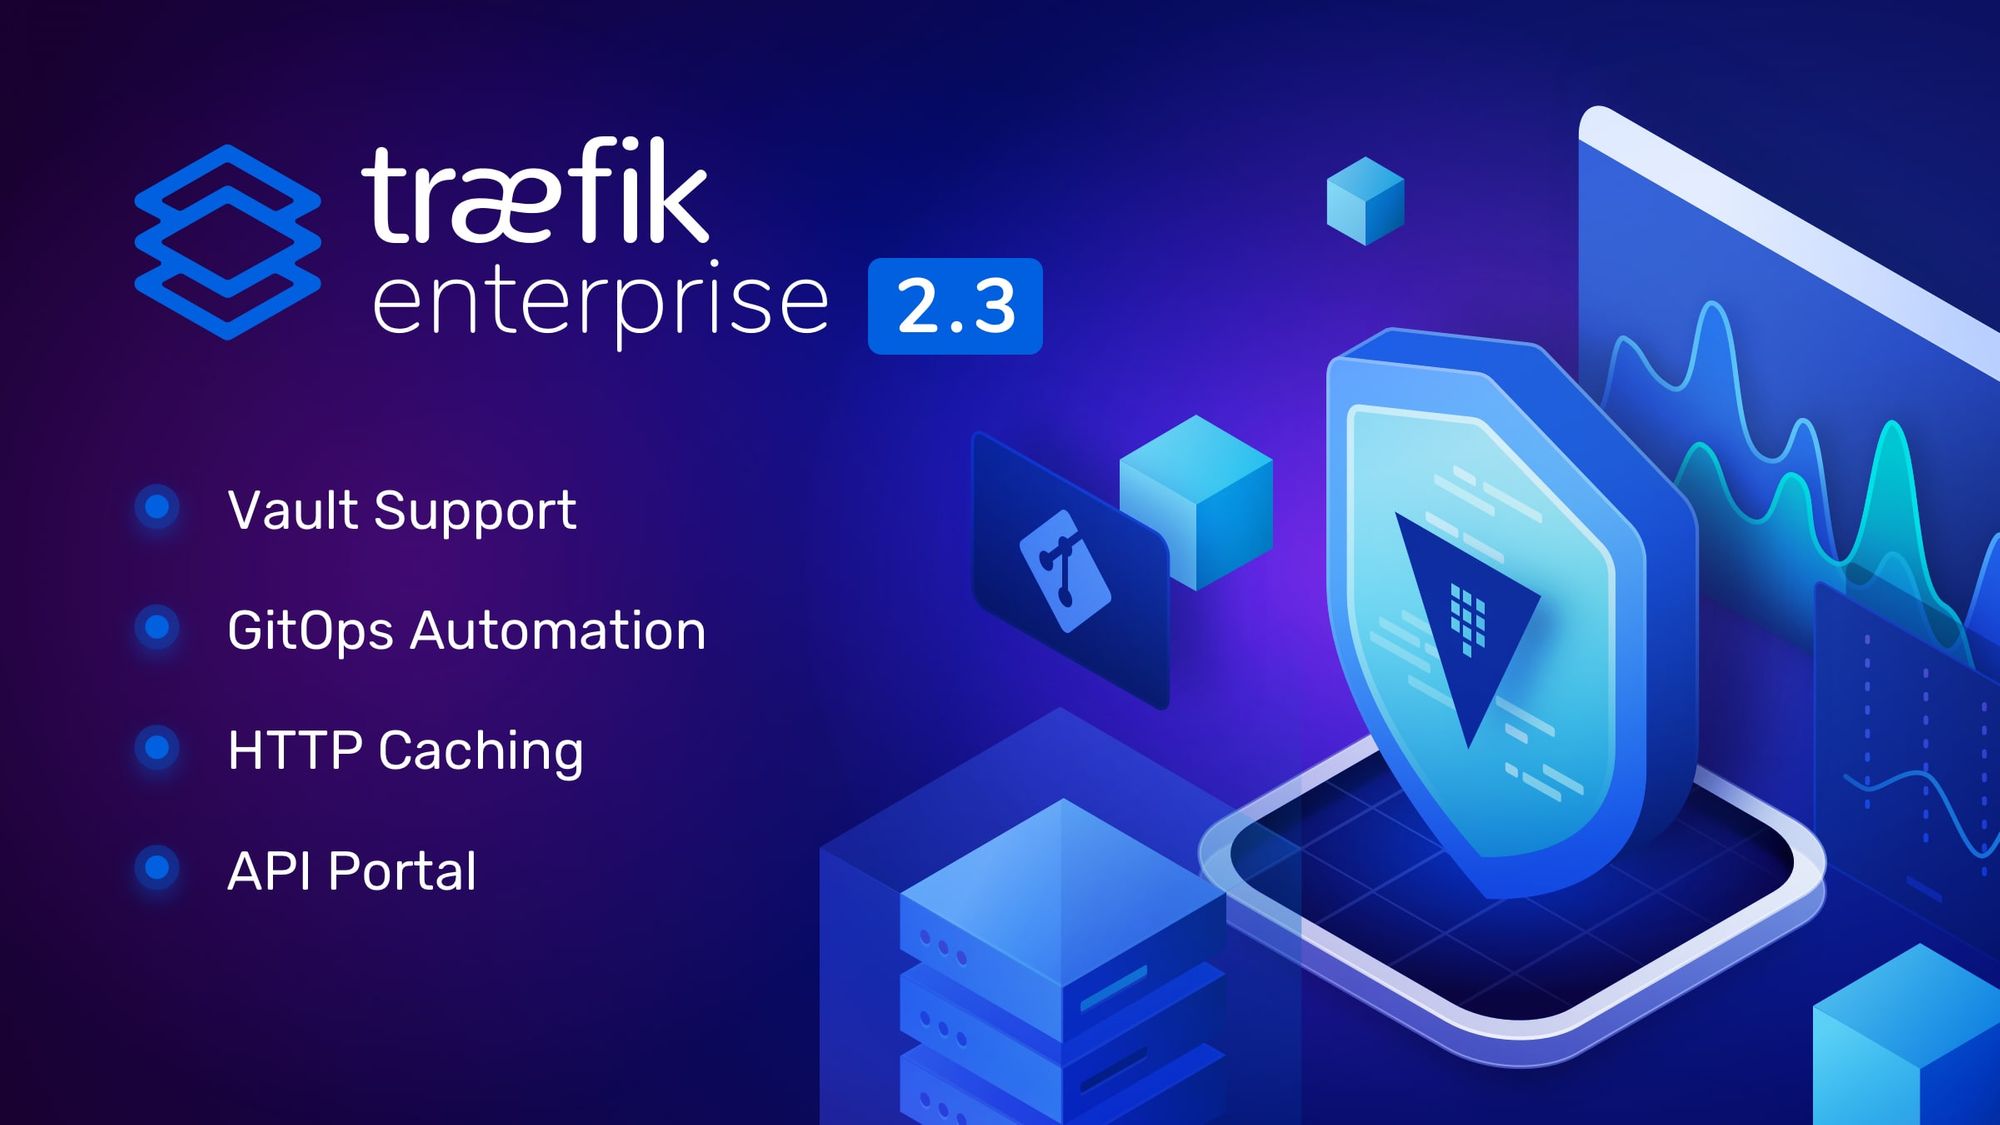 Traefik Enterprise 2.3 Arrives with Vault Support, GitOps Compliance, and More